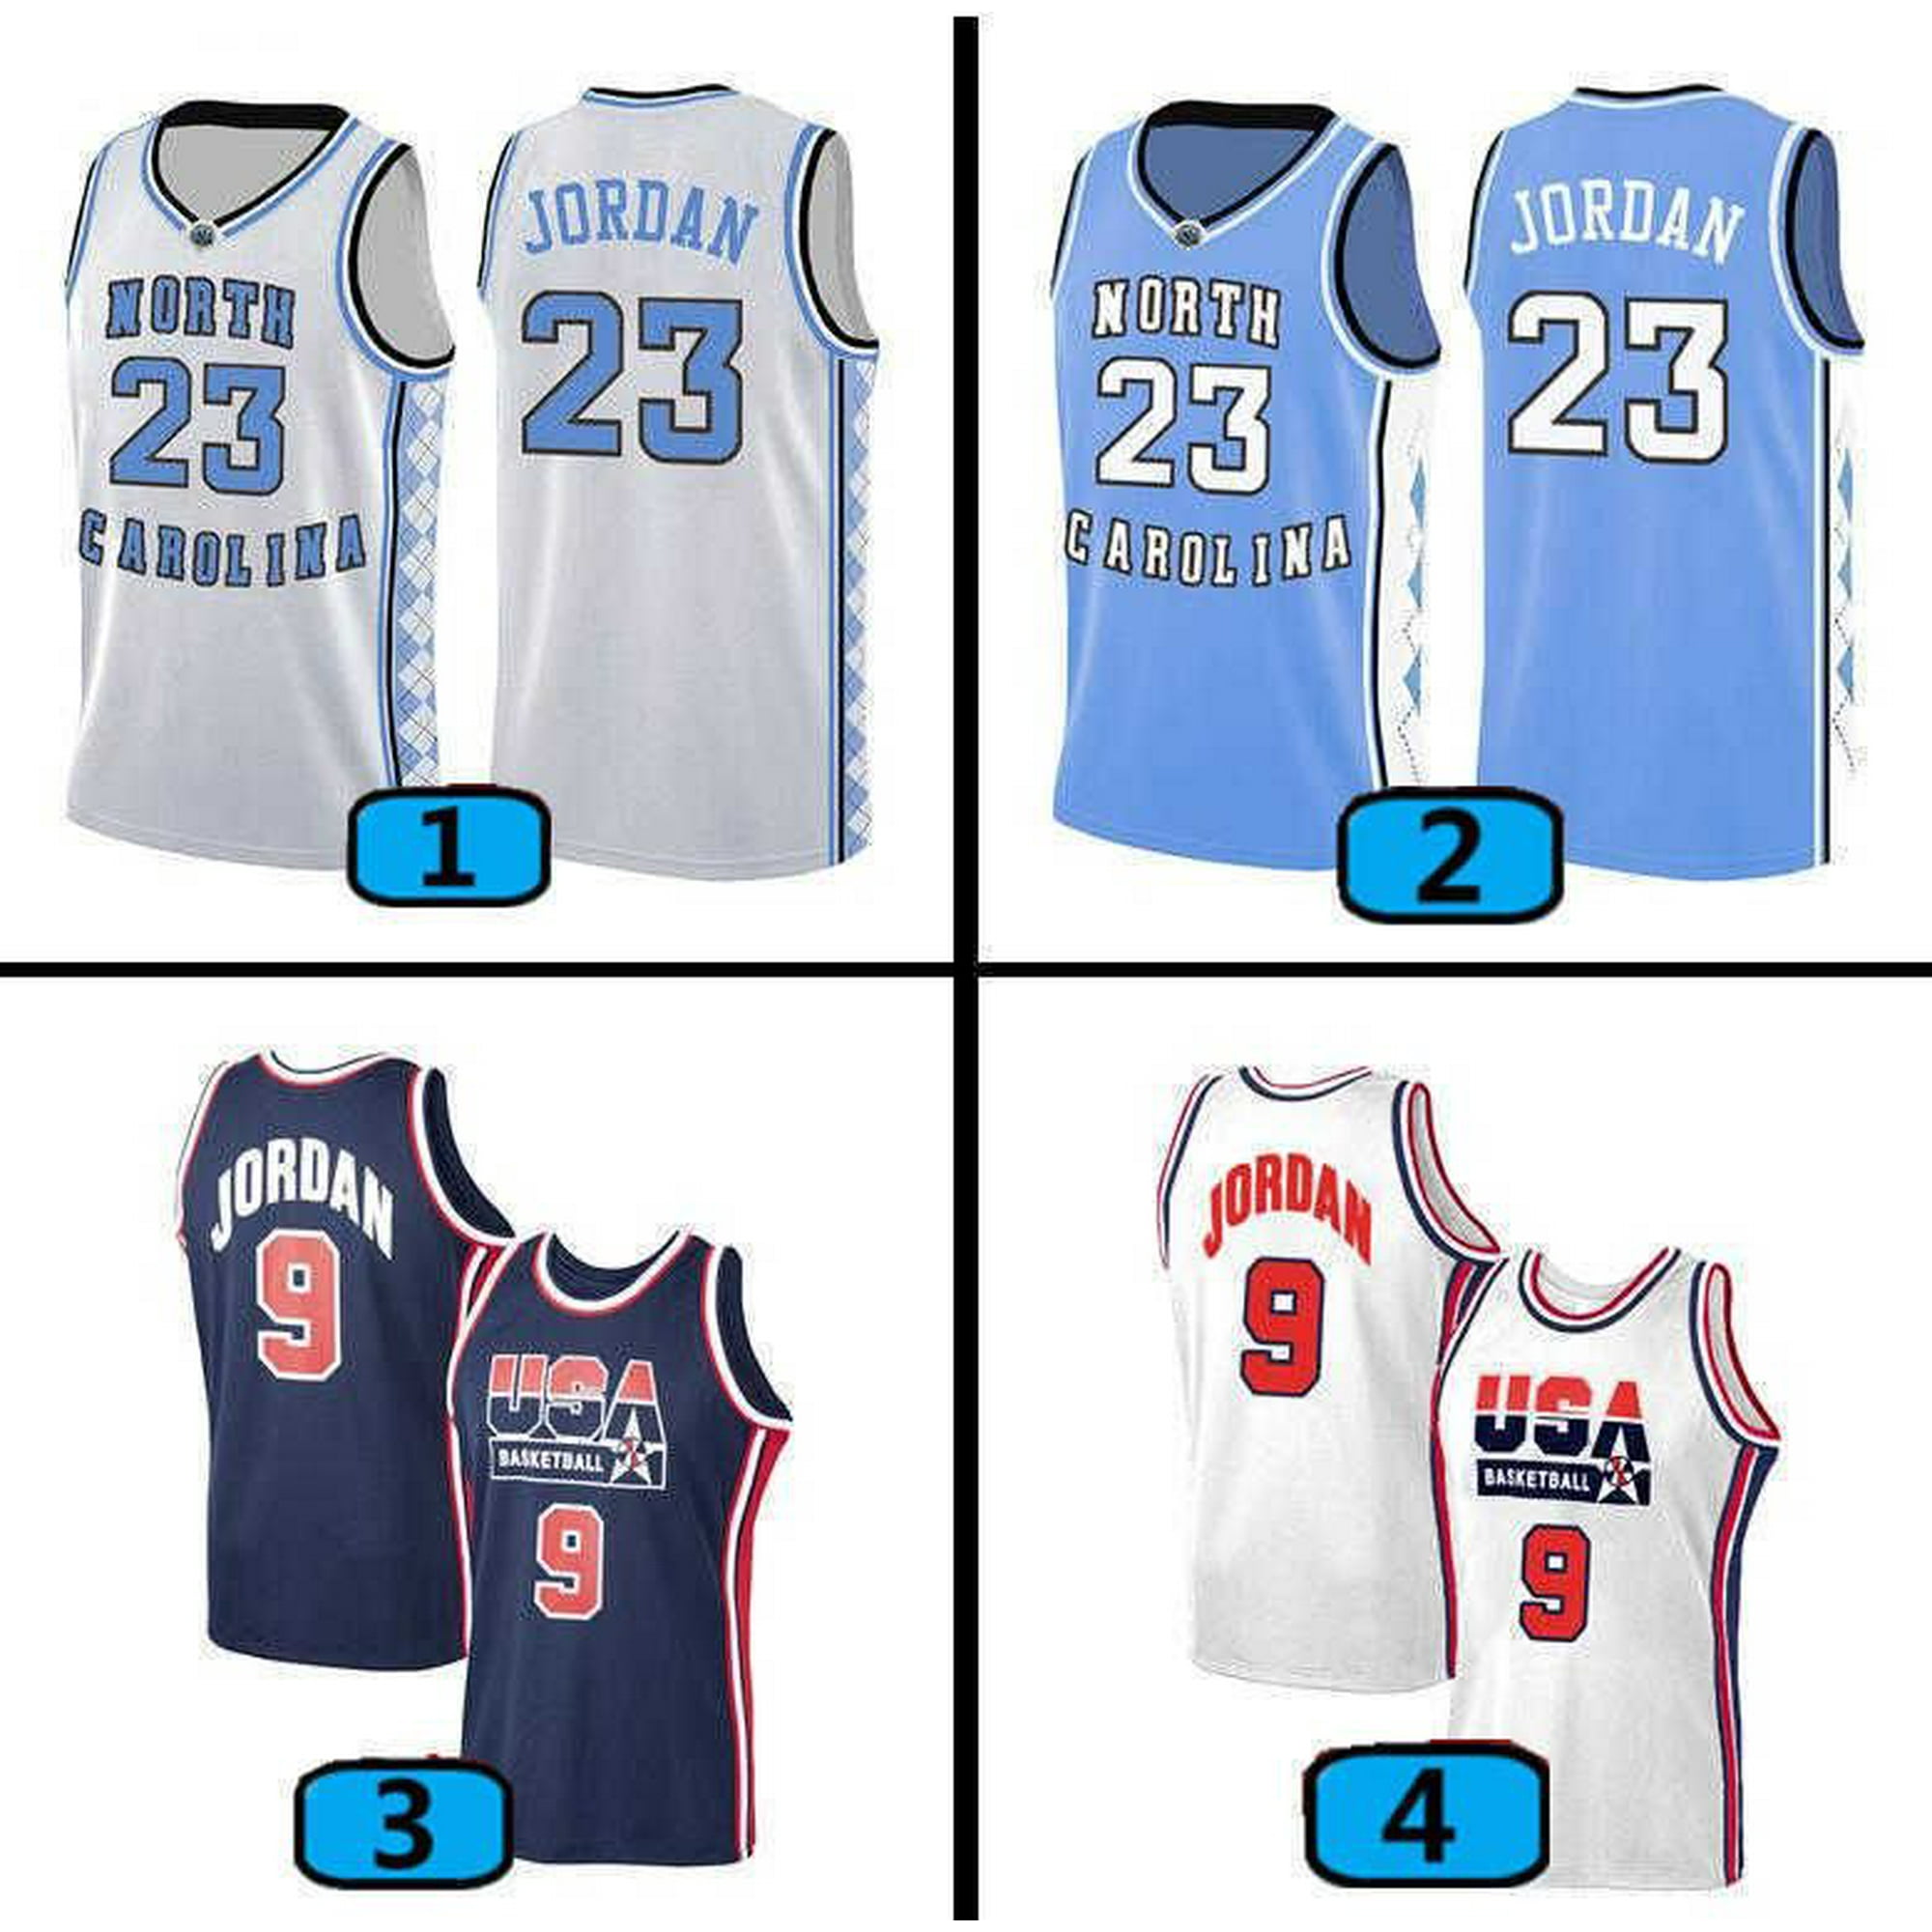 Basketball Chicago Bulls Jordan 23 jersey/vest NBA